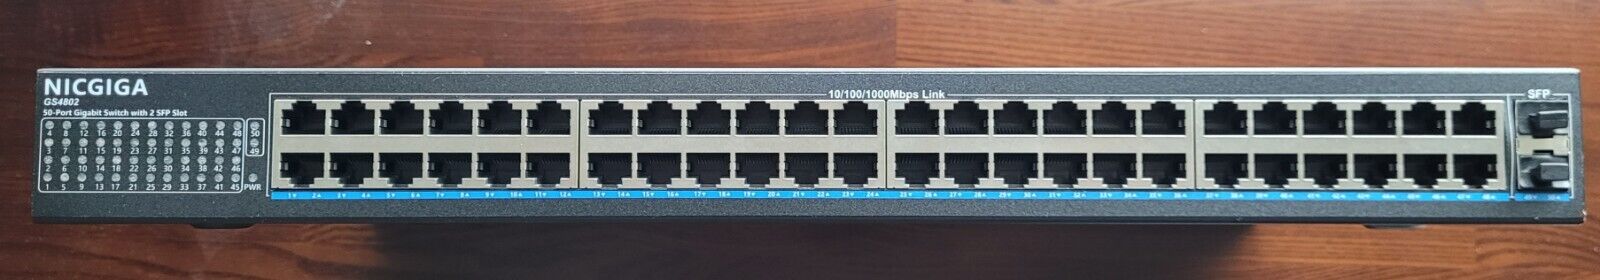 50 Port Gigabit Ethernet Switch Unmanaged + 2 x 1G SFP Port, NICGIGA Network